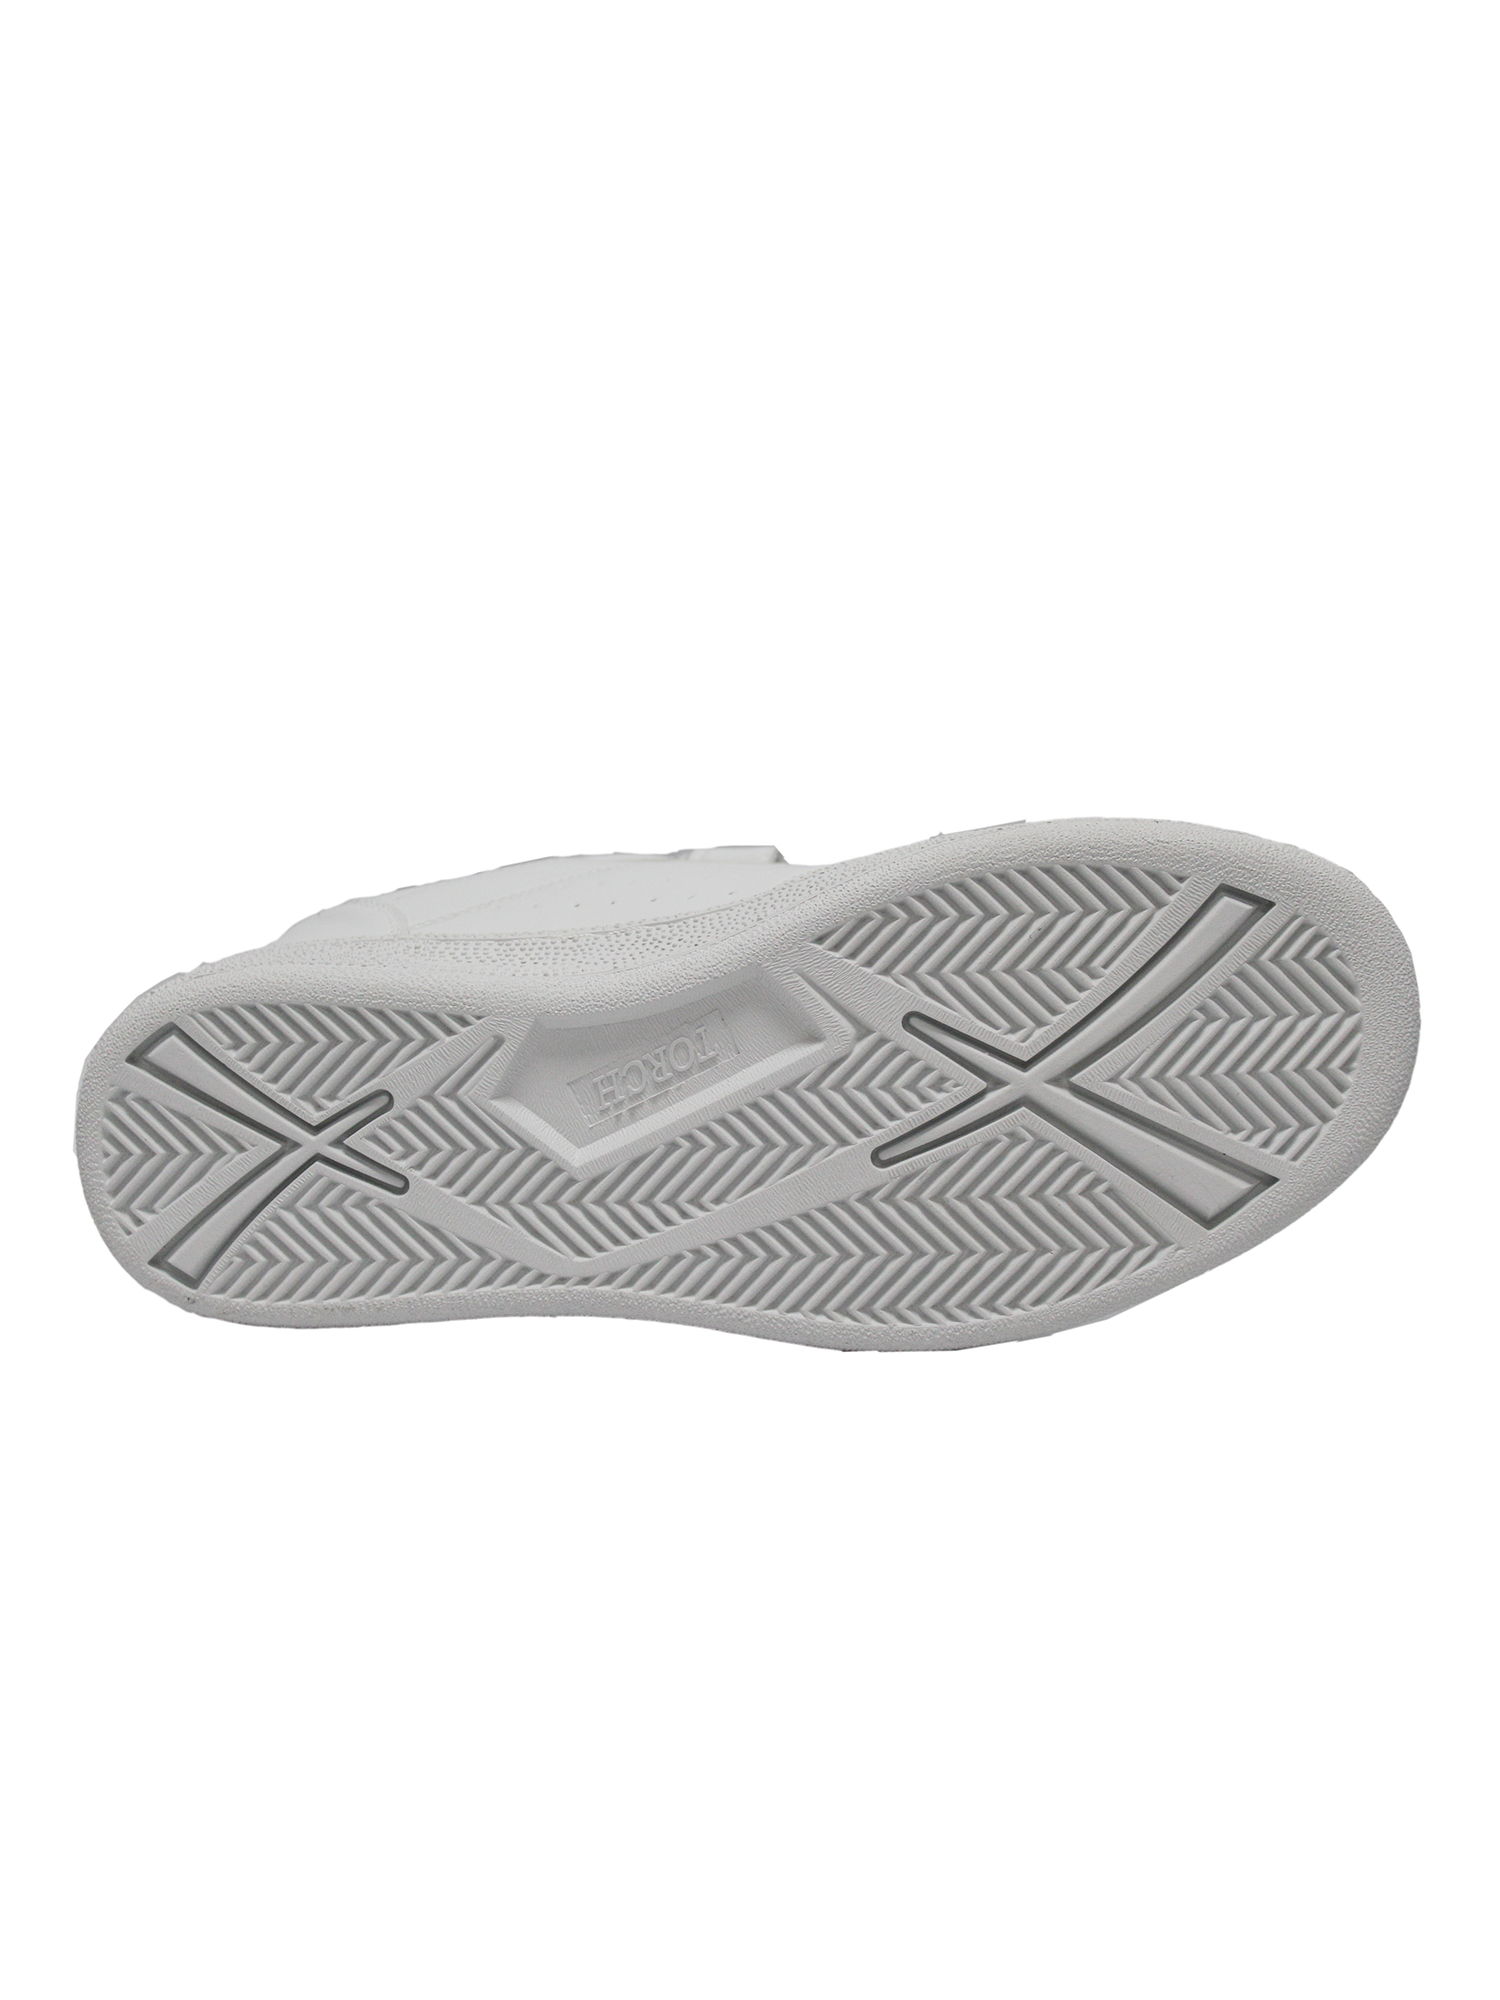 Tanleewa Men's Leather Strap Sneakers Lightweight Hook and Loop Walking Shoe Size 6.5 Adult Male - image 4 of 5